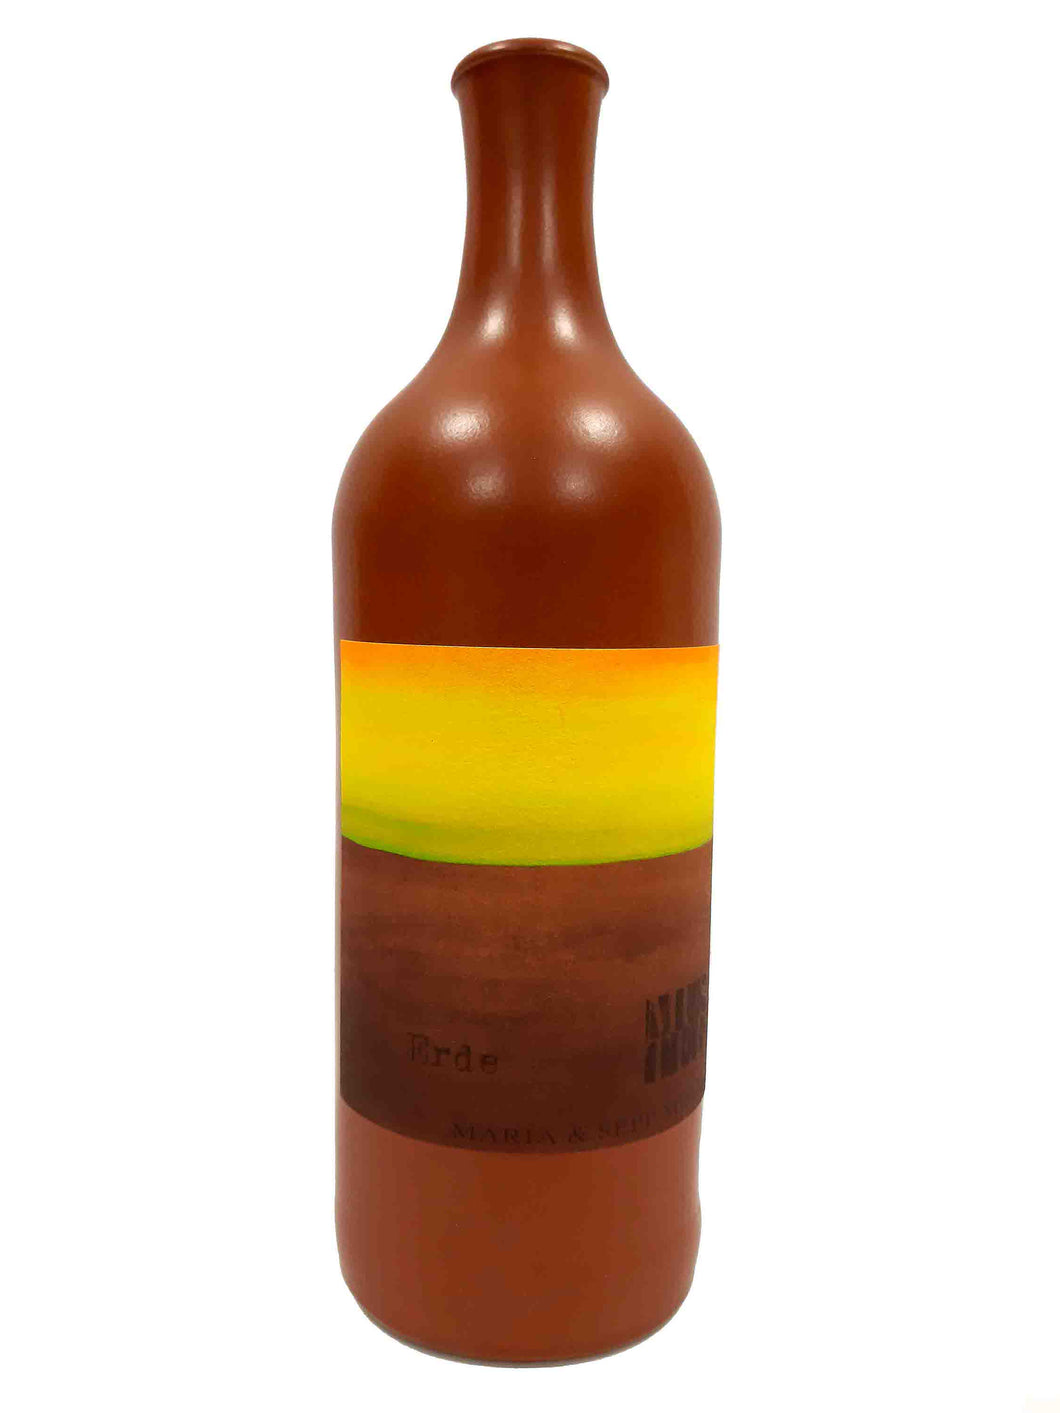 Muster - Erde 2020 (Orange Wine)